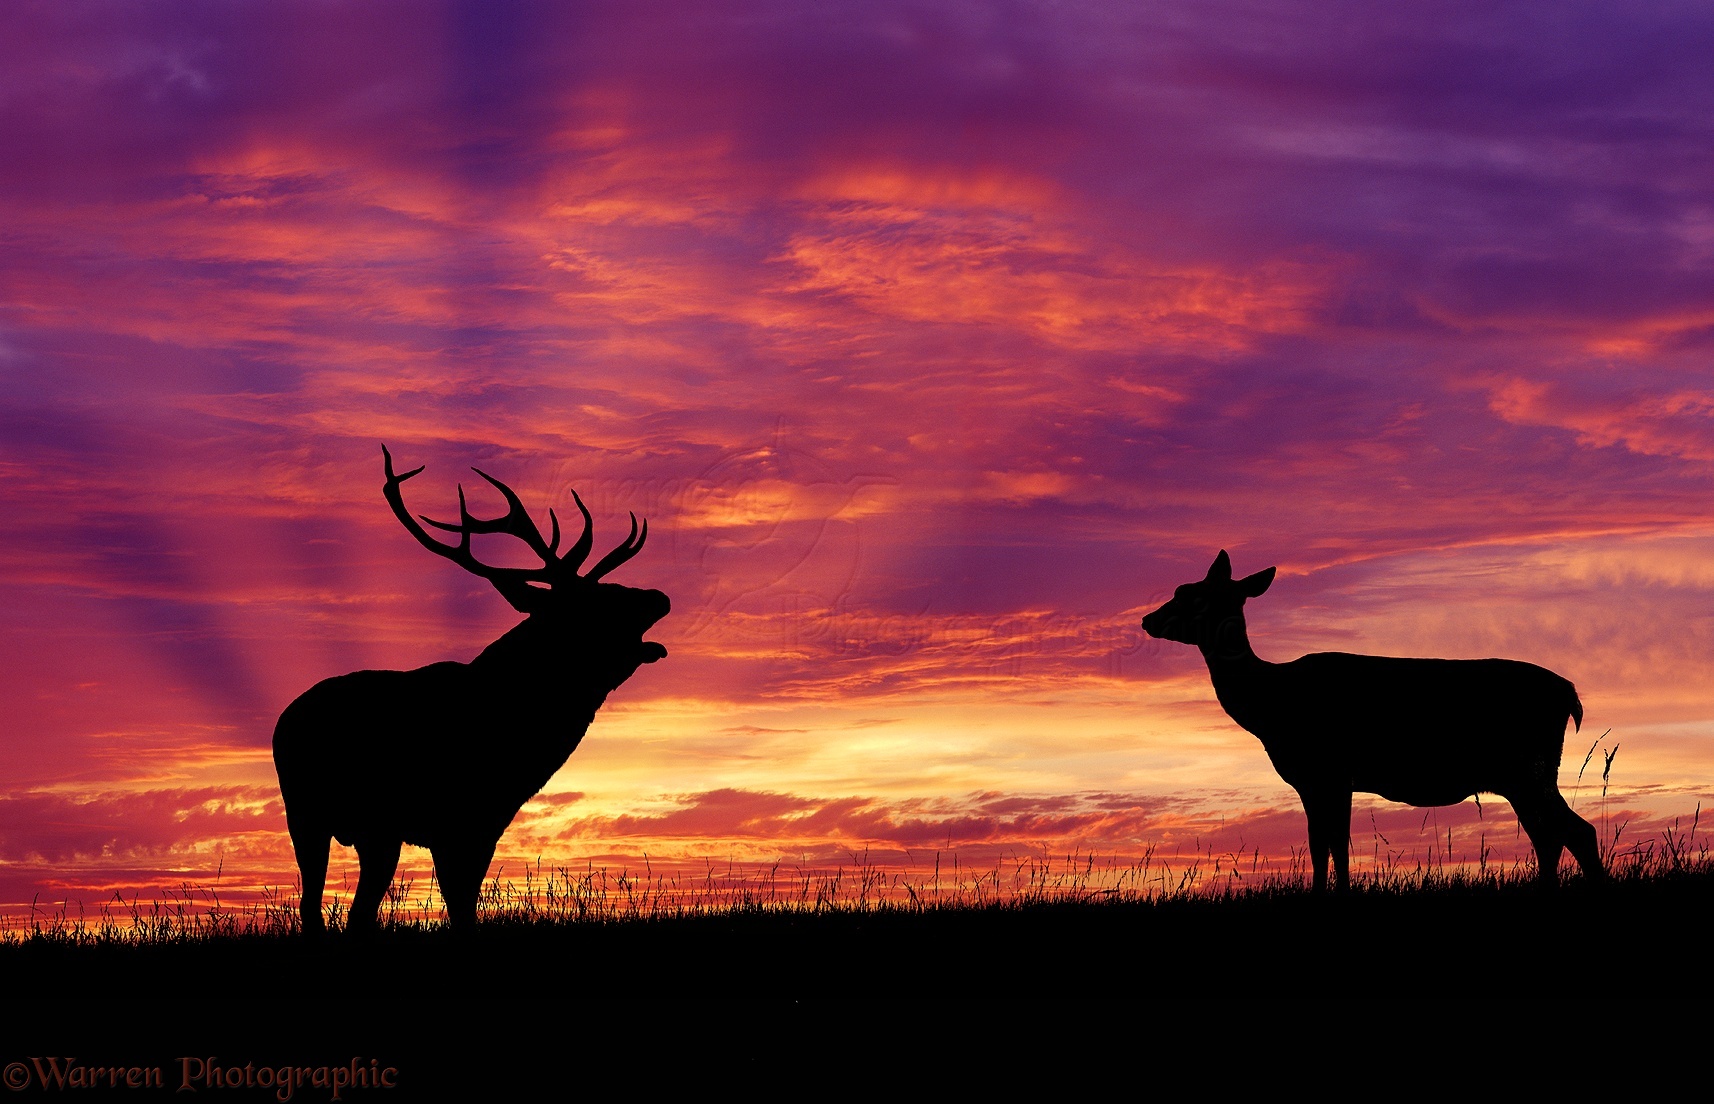 https://www.warrenphotographic.co.uk/photgraphy/bigs/04049-red-deer-at-sunset.jpg